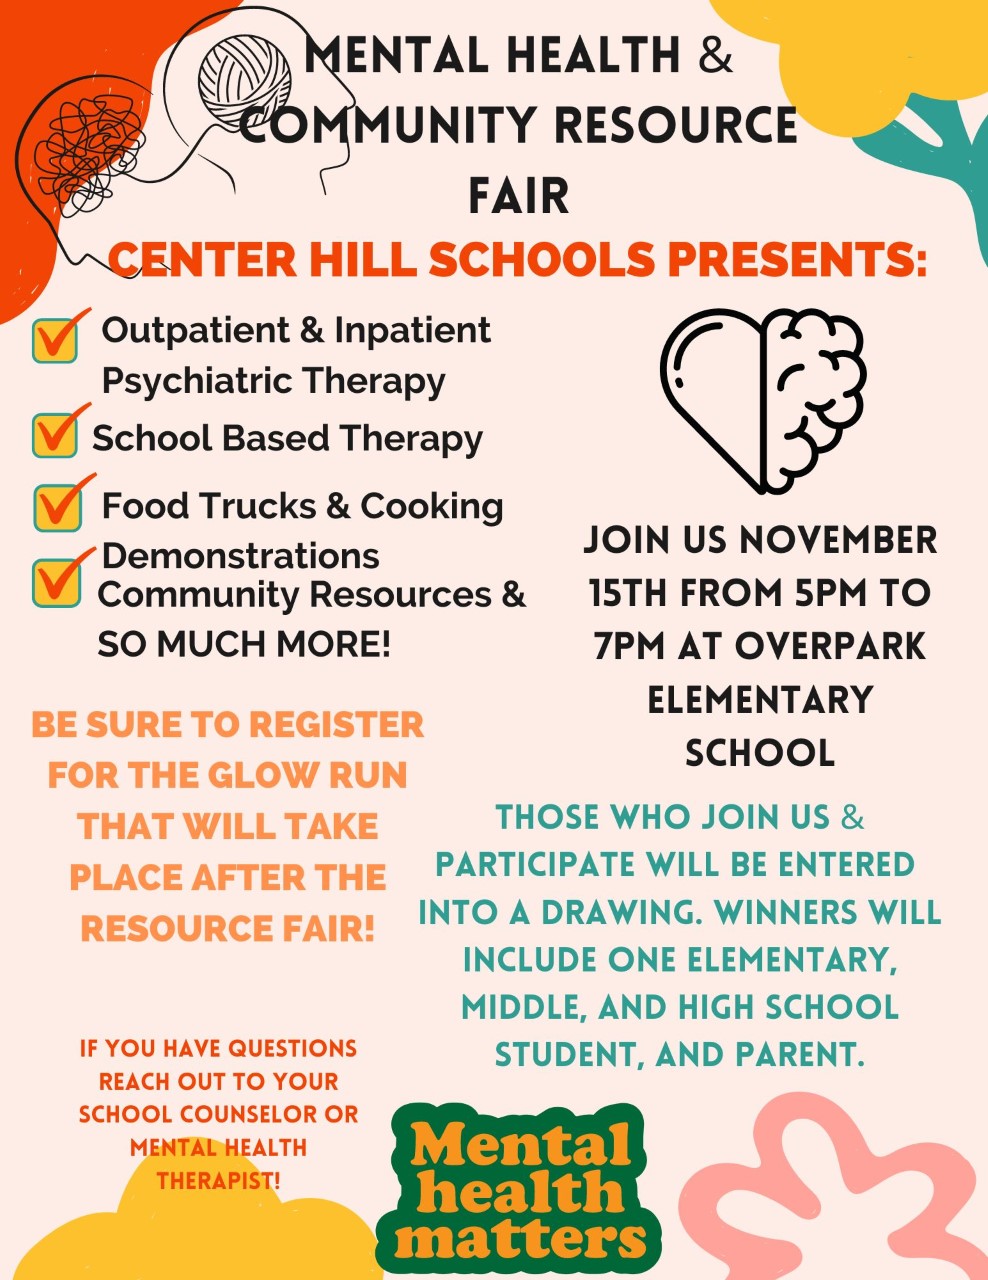 Mental Health and Community Resource Fair is November 15, 2022 at 7:00 PM at Overpark